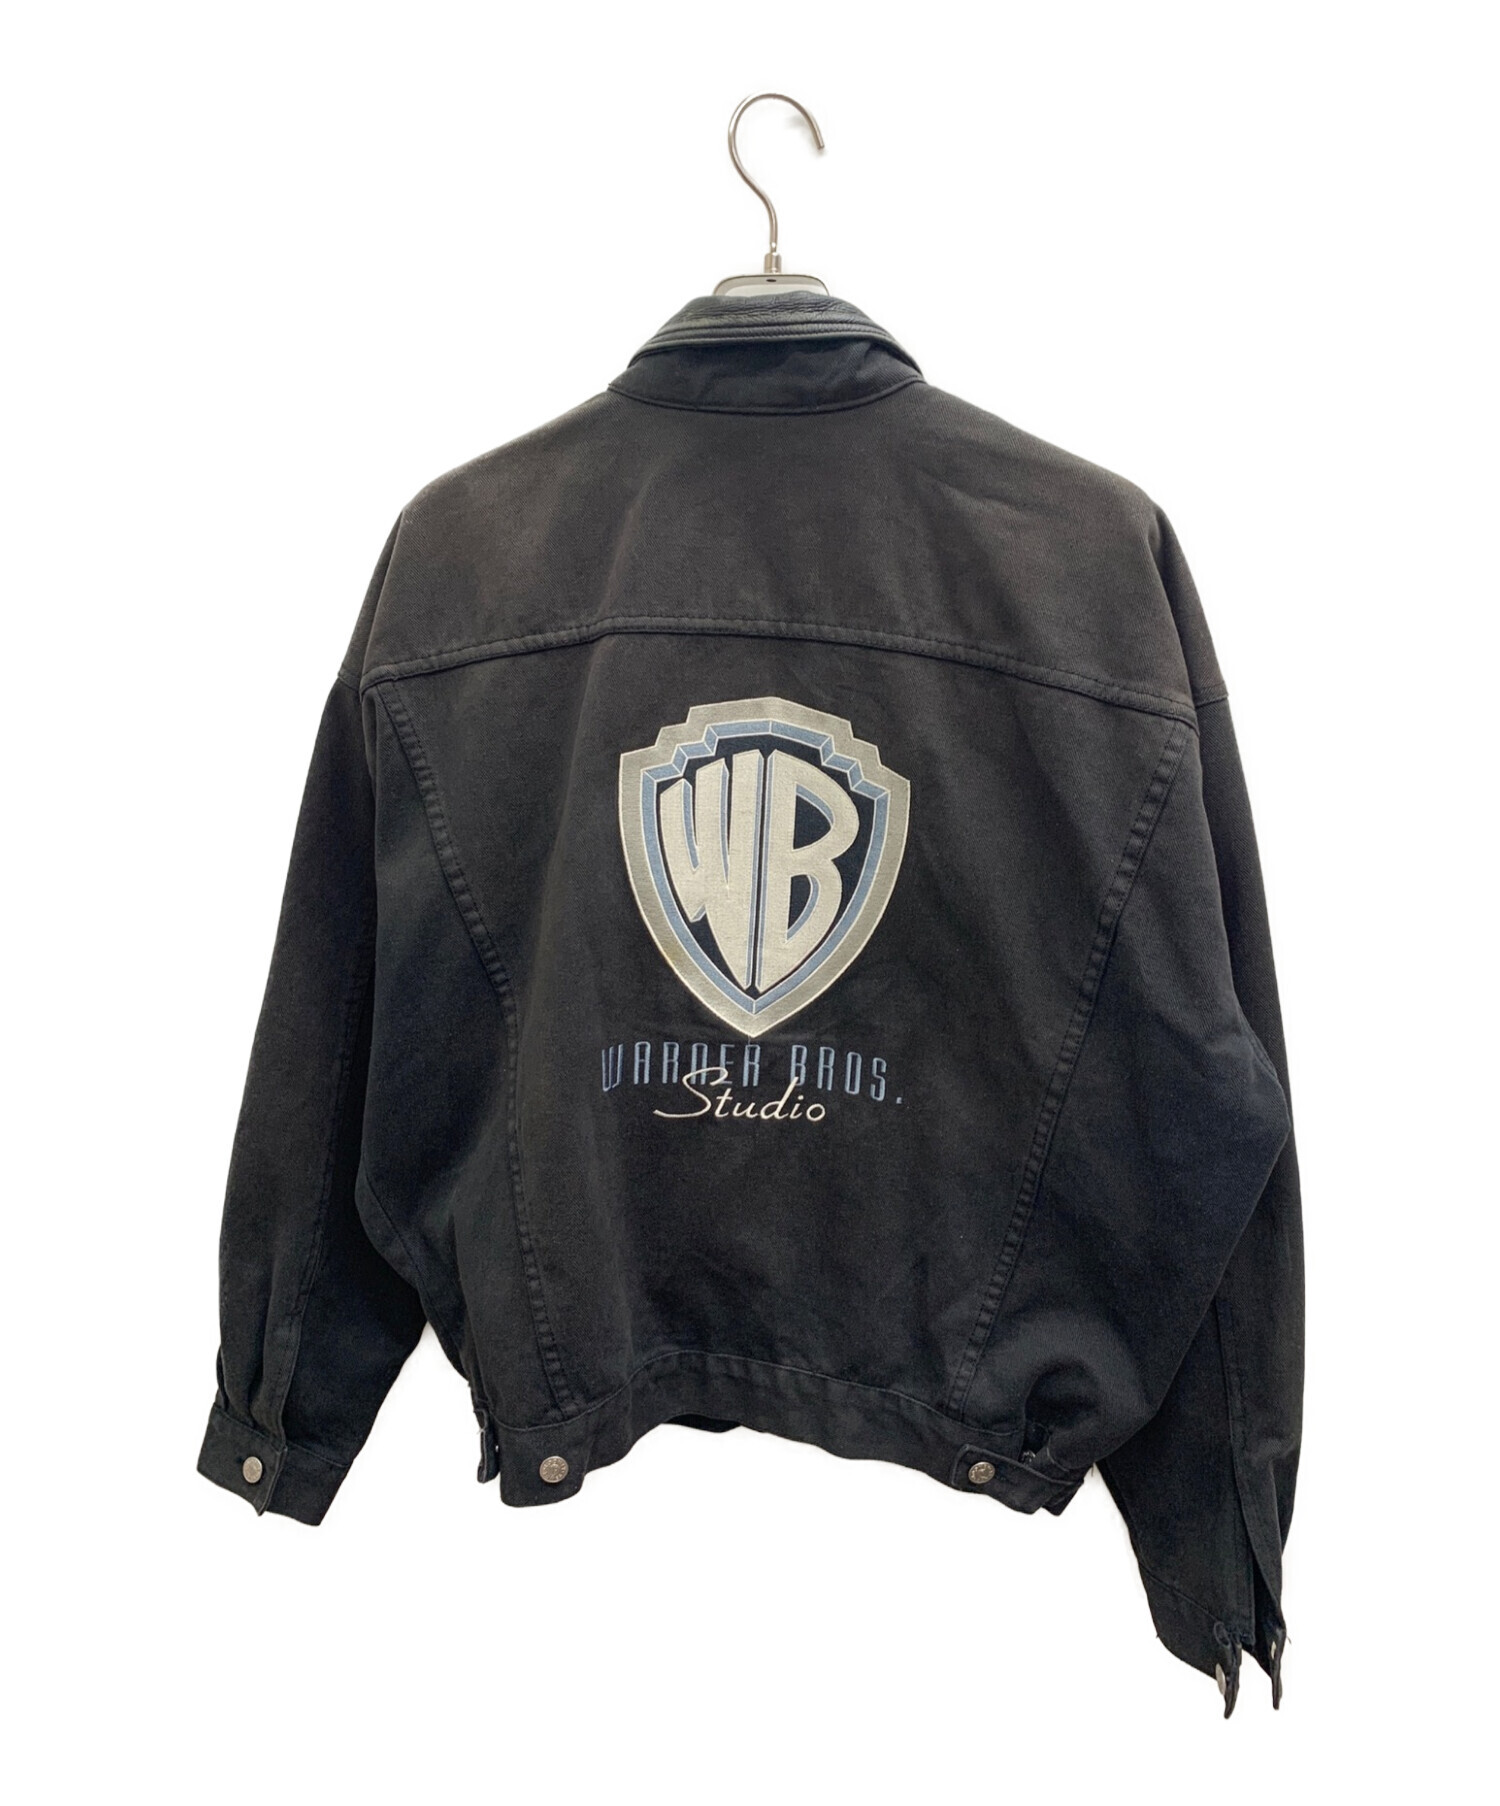 Warner Bros. Studioジャケットワーナーブロススタジオ